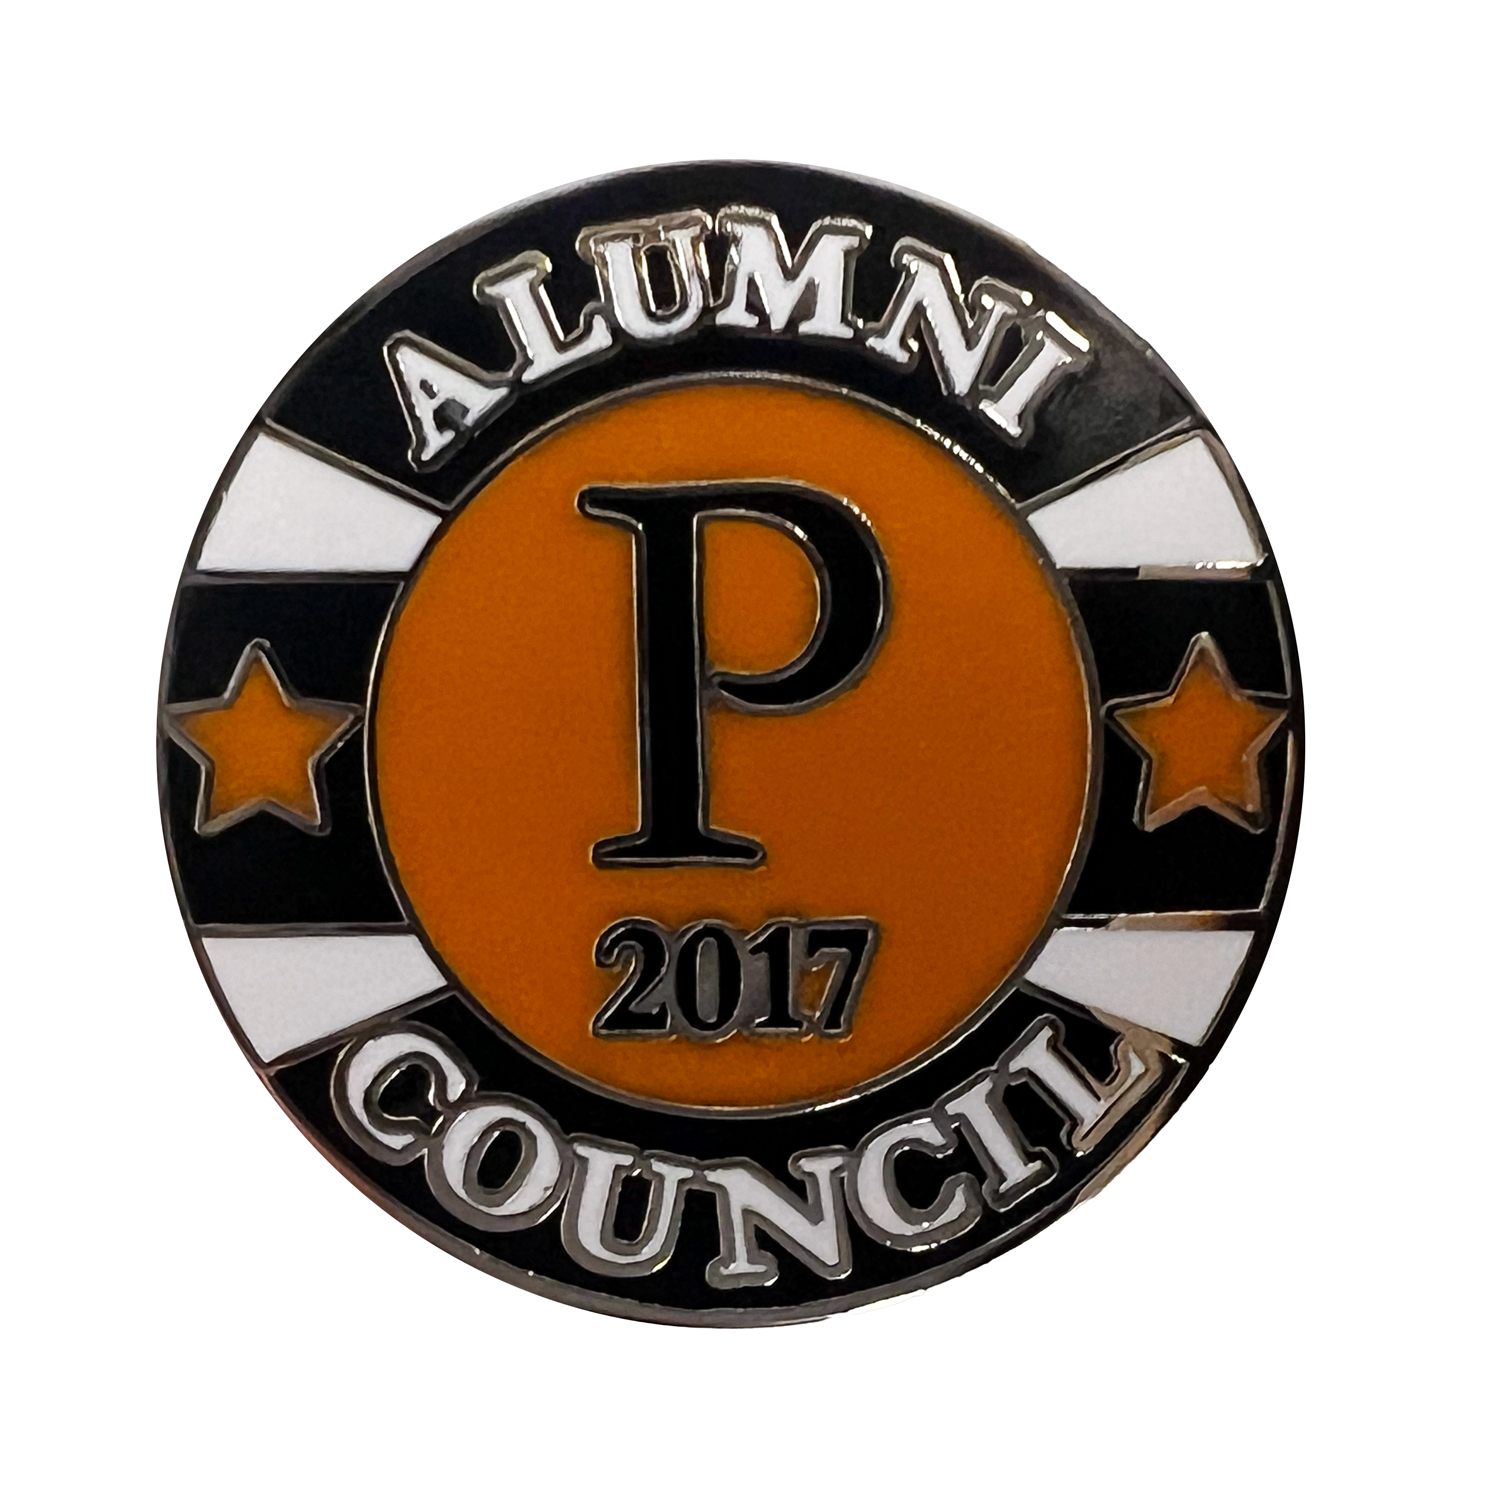 2017 Alumni Council Executive Committee (ACEC) Pin